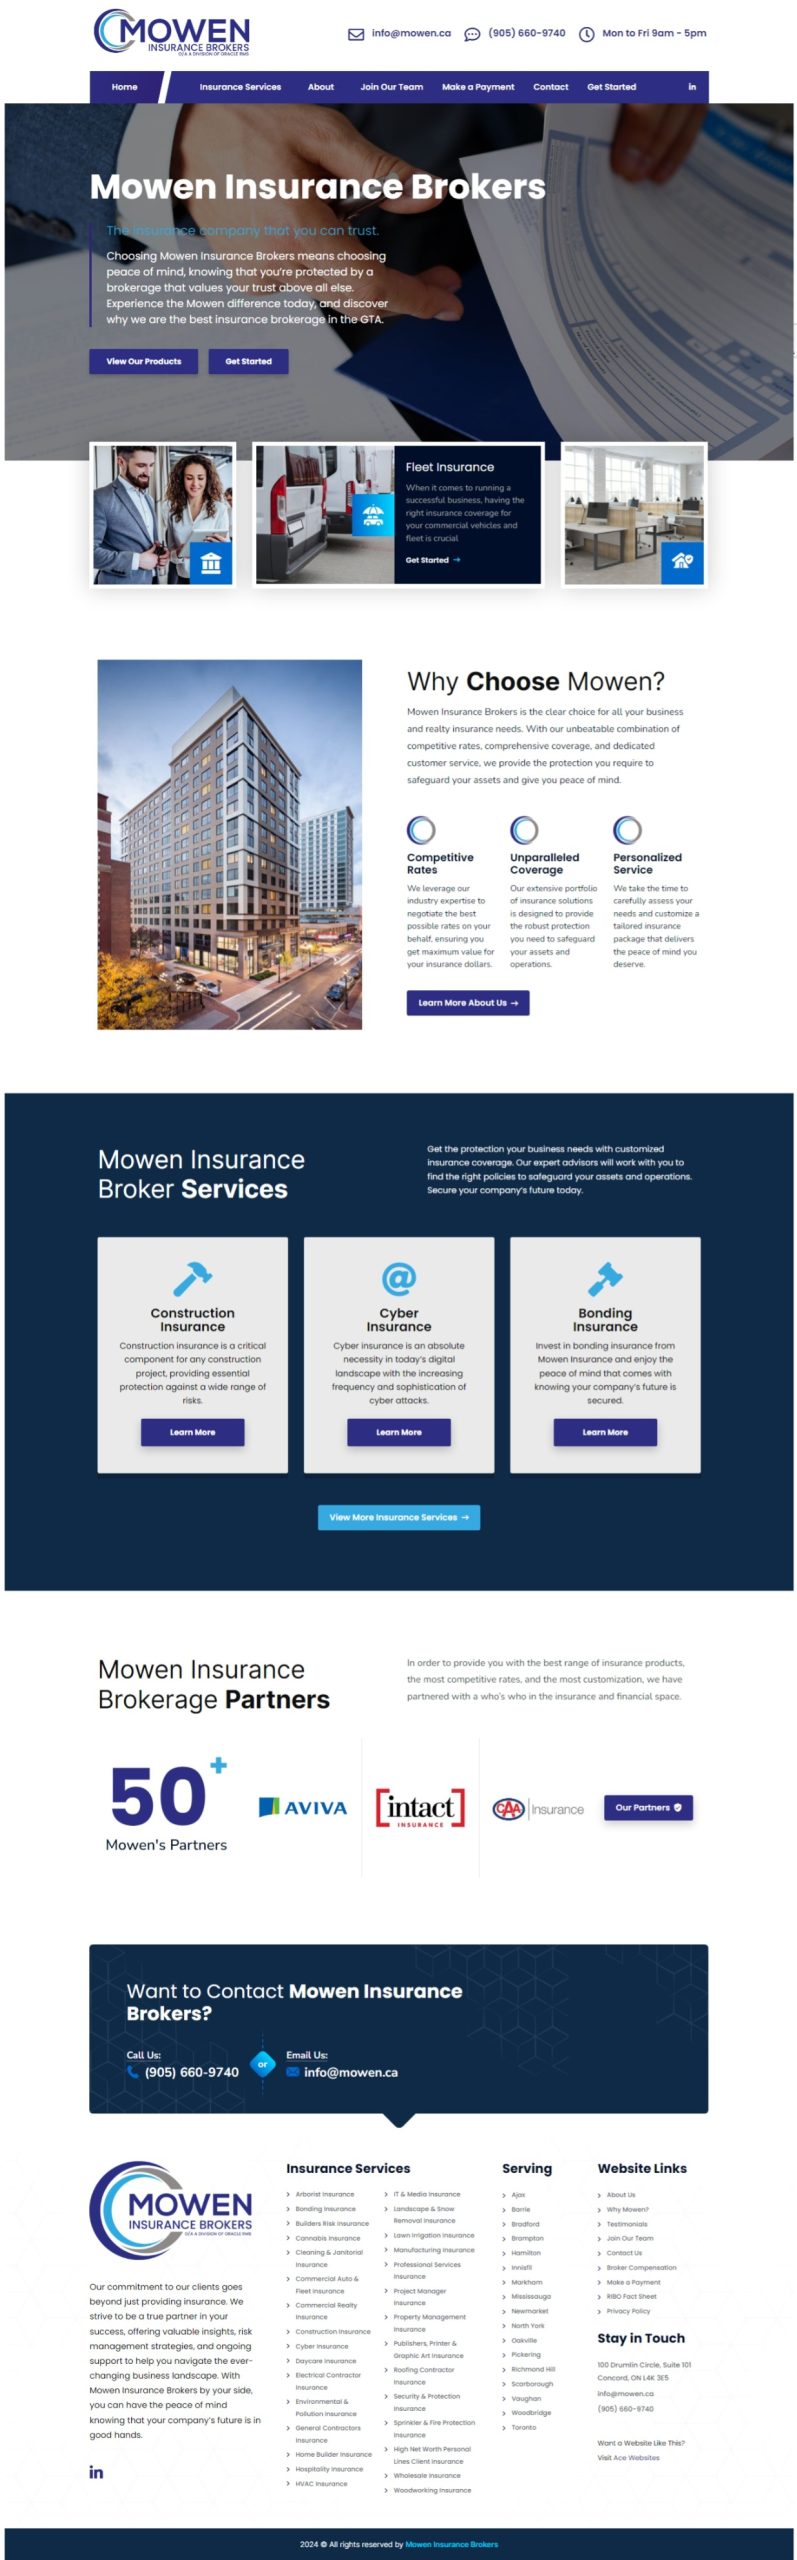 Mowen Insurance Brokers